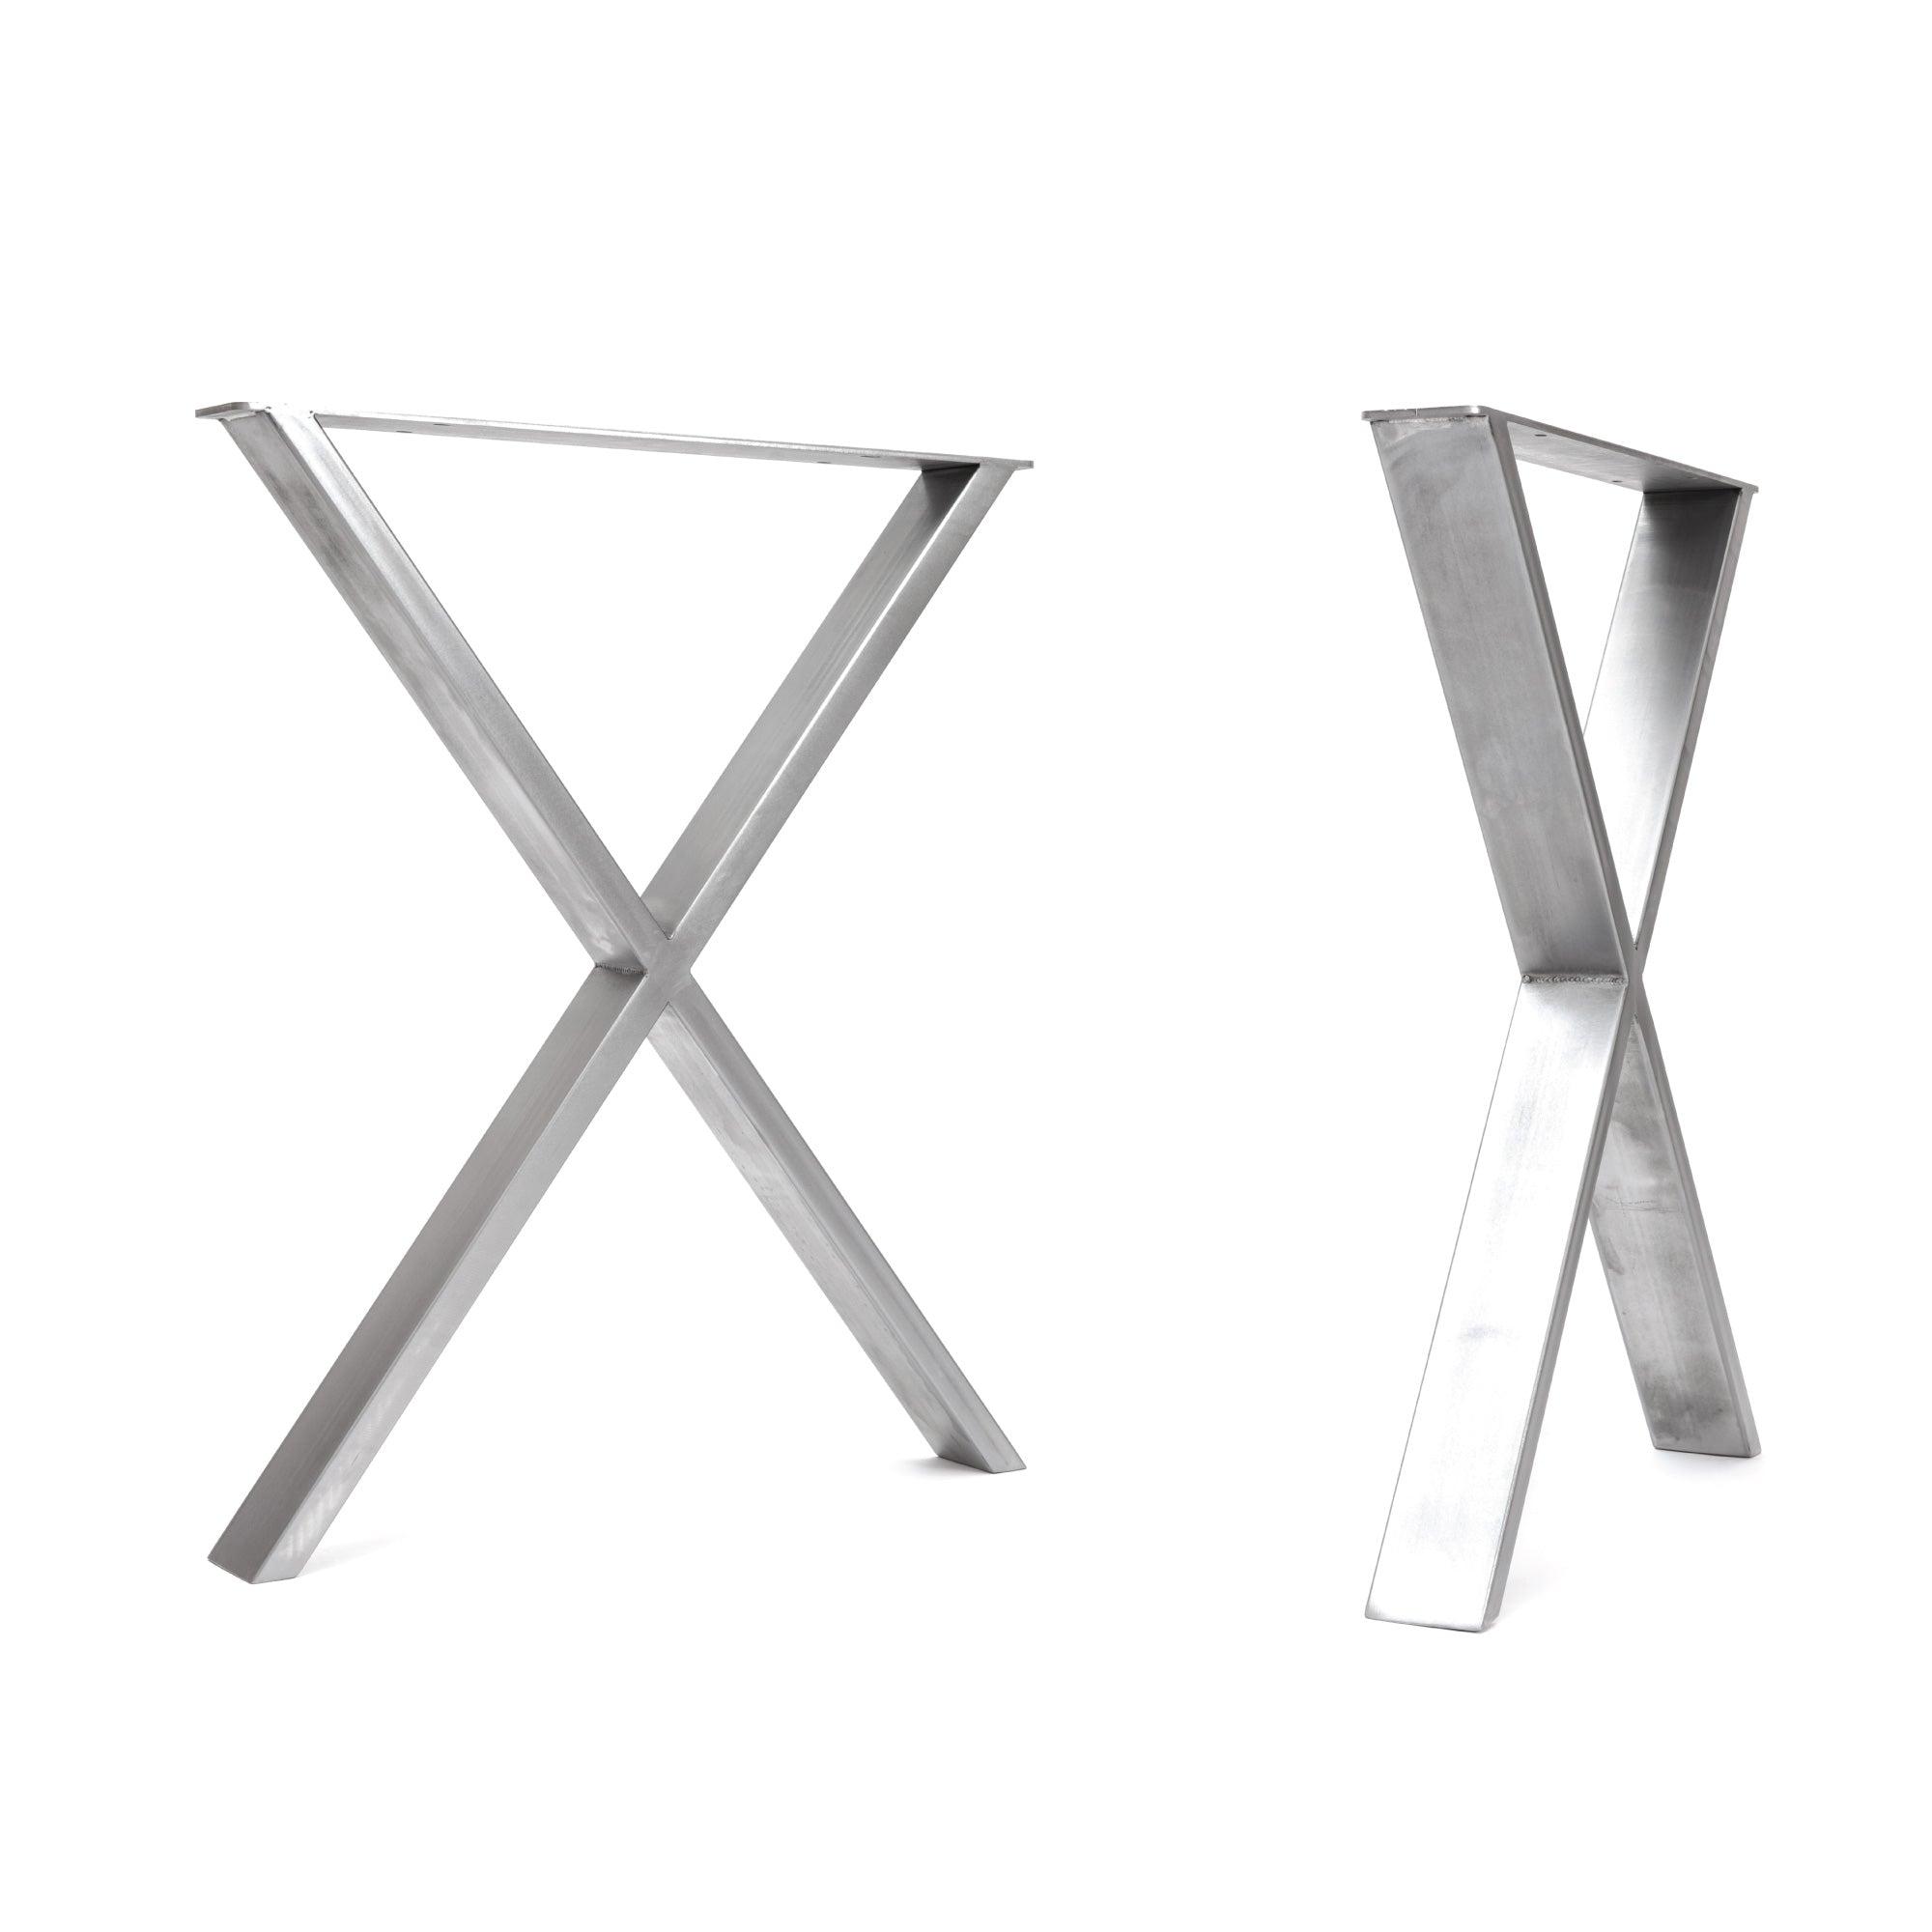 X-Frame Industrial legs-Table (H71cm x W58cm)-Clear Coat-The Hairpin Leg Co.